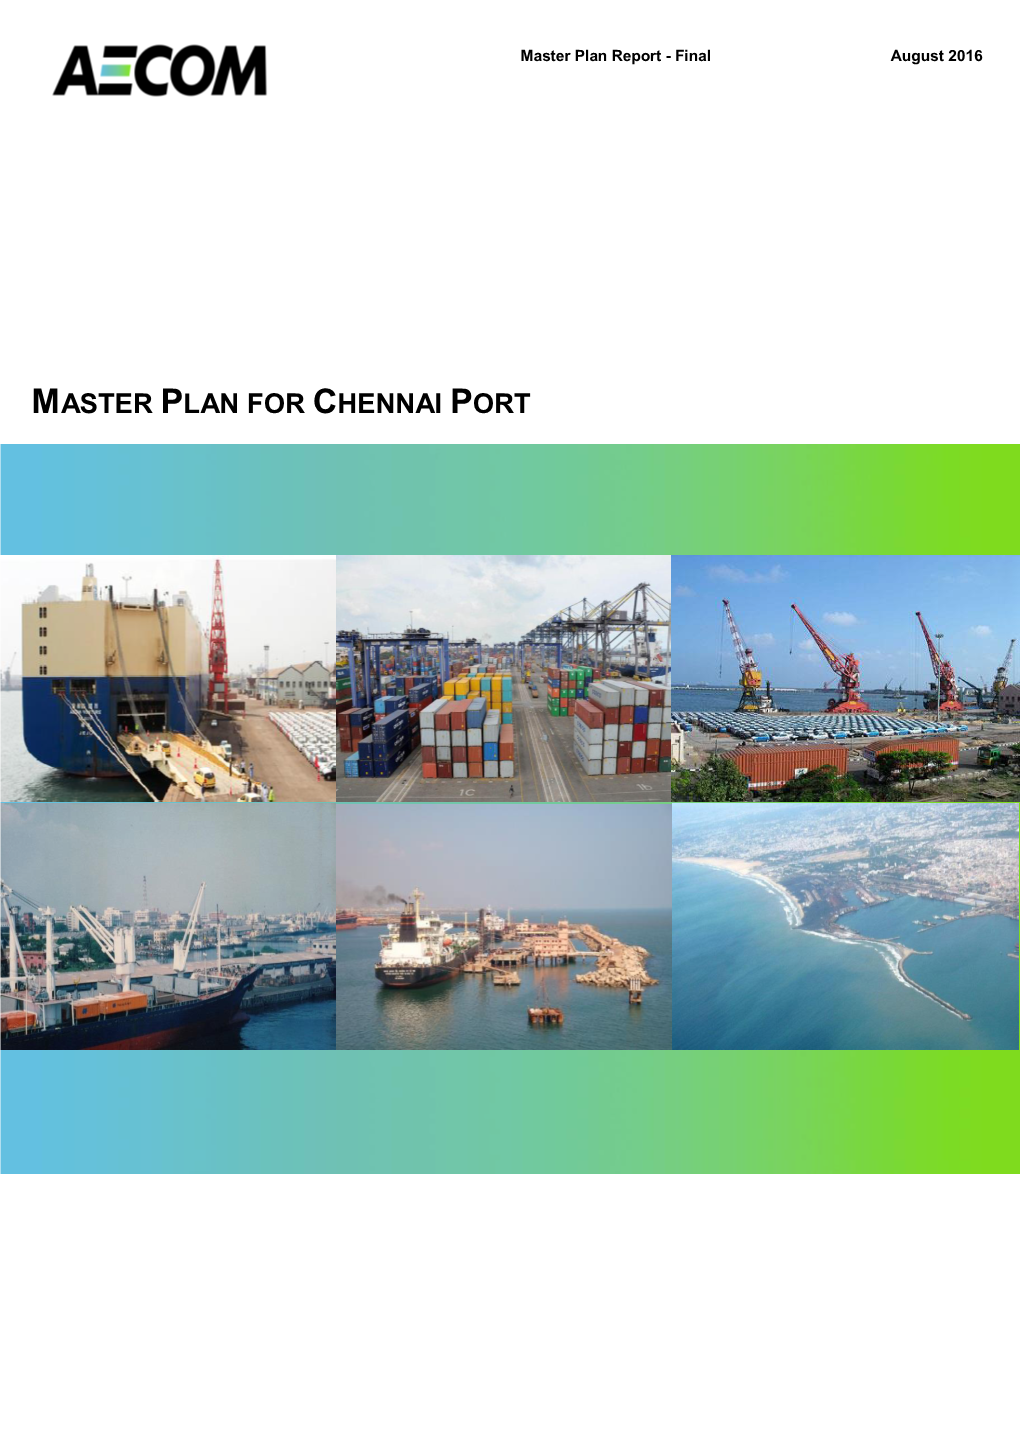 Master Plan for Chennai Port